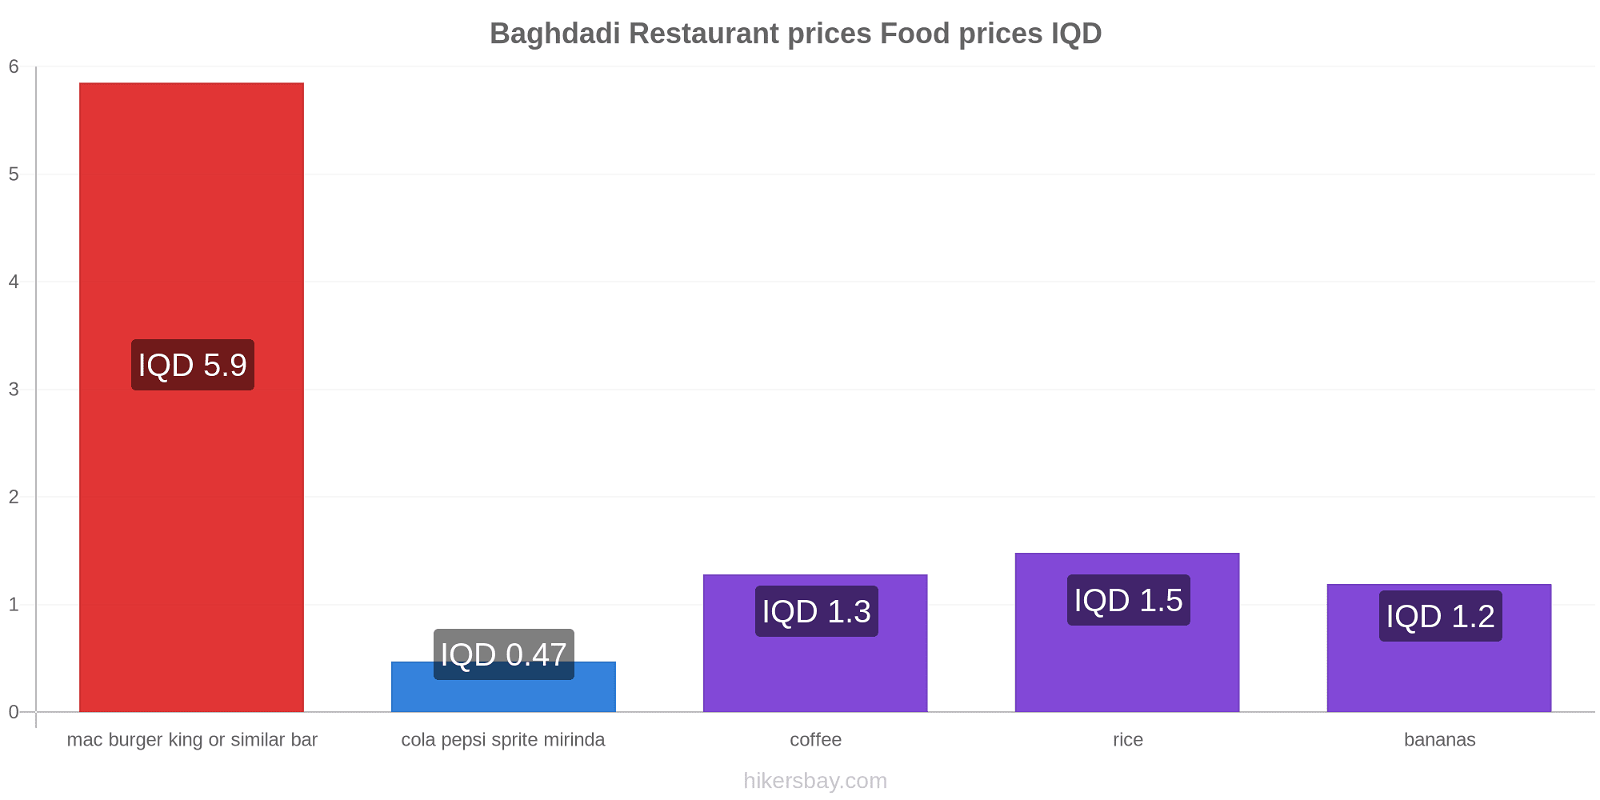 Baghdadi price changes hikersbay.com